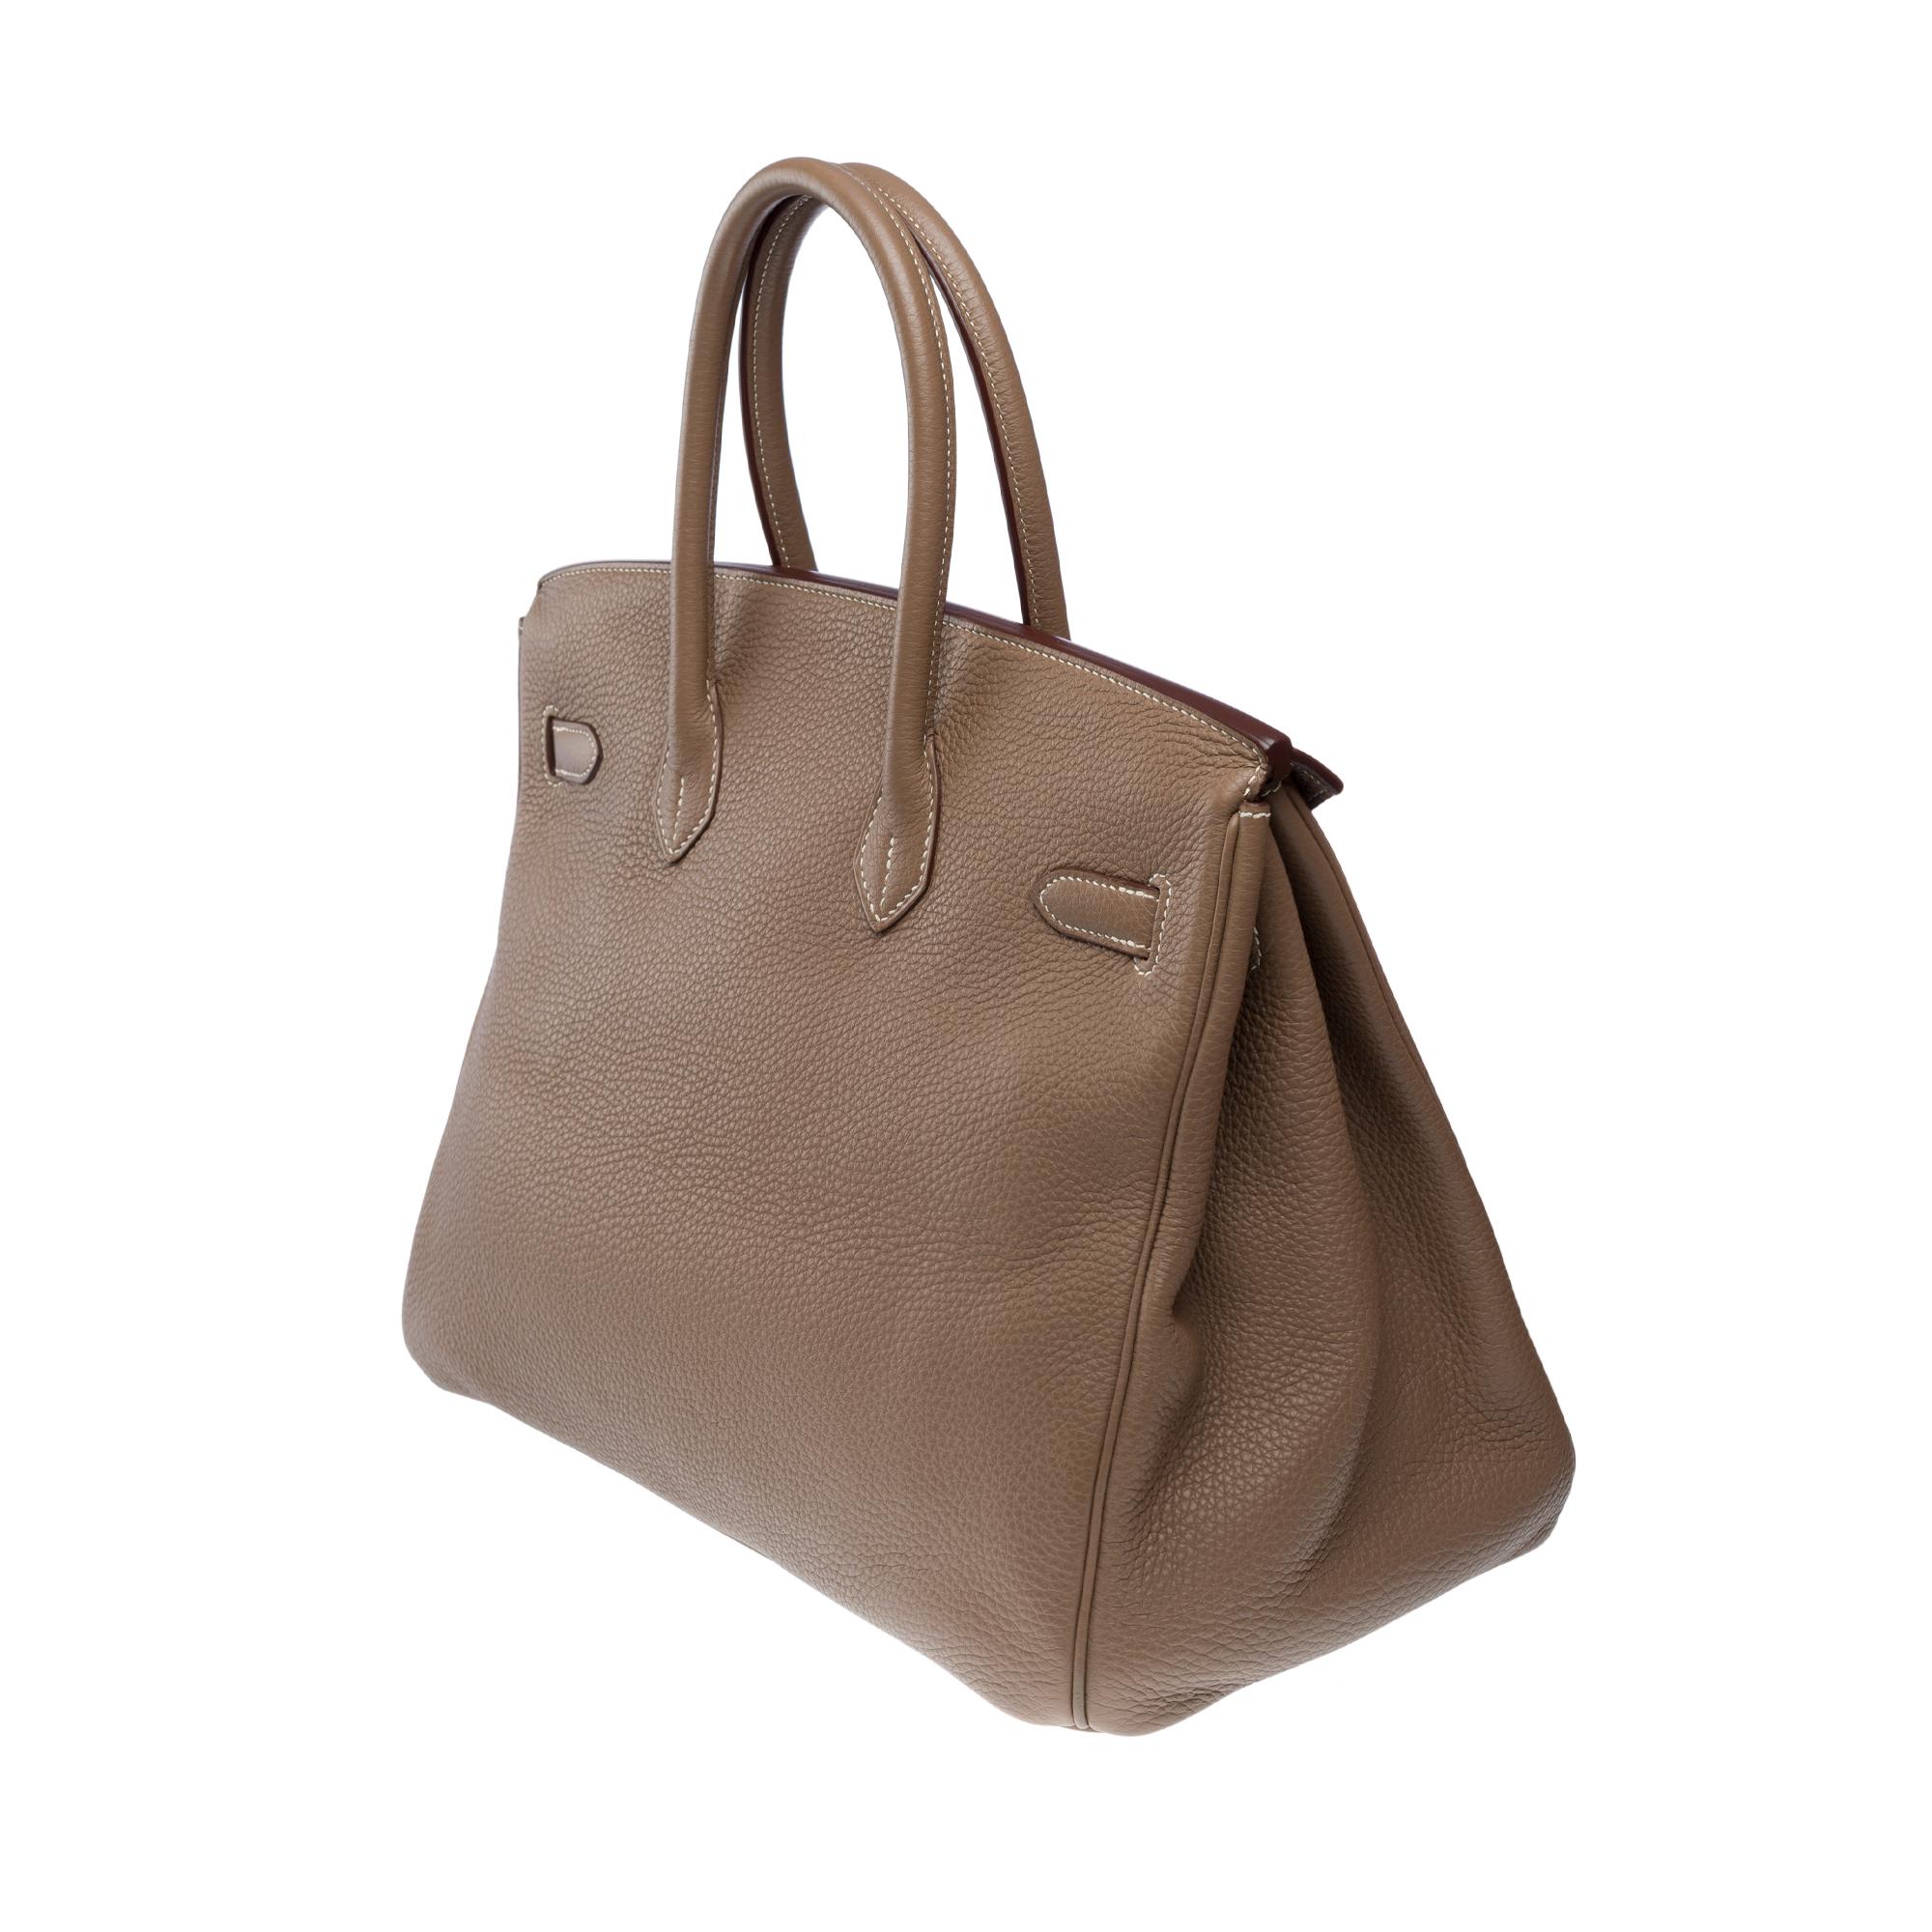 Stunning Hermès Birkin 35 handbag in etoupe Togo leather, SHW 3